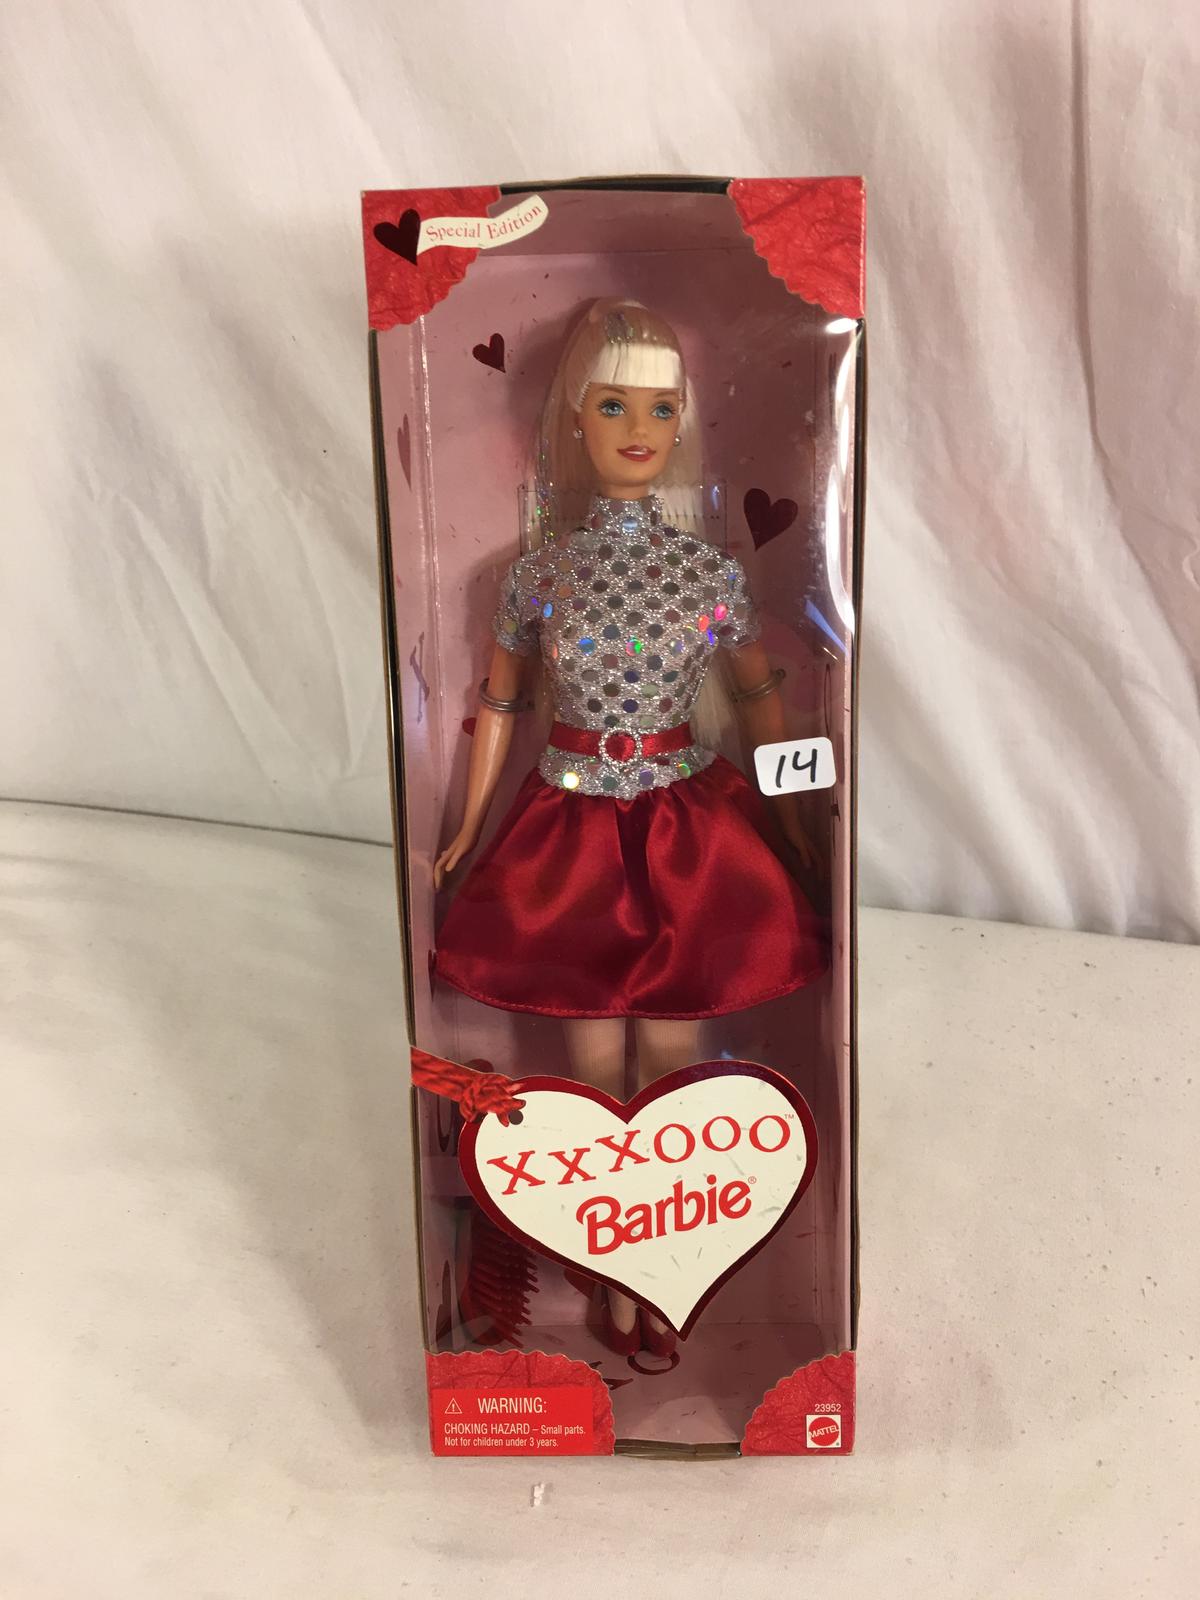 Collector NIB Barbie Mattel Special Edition XXX0000 Barbie Doll 13"Tall Box